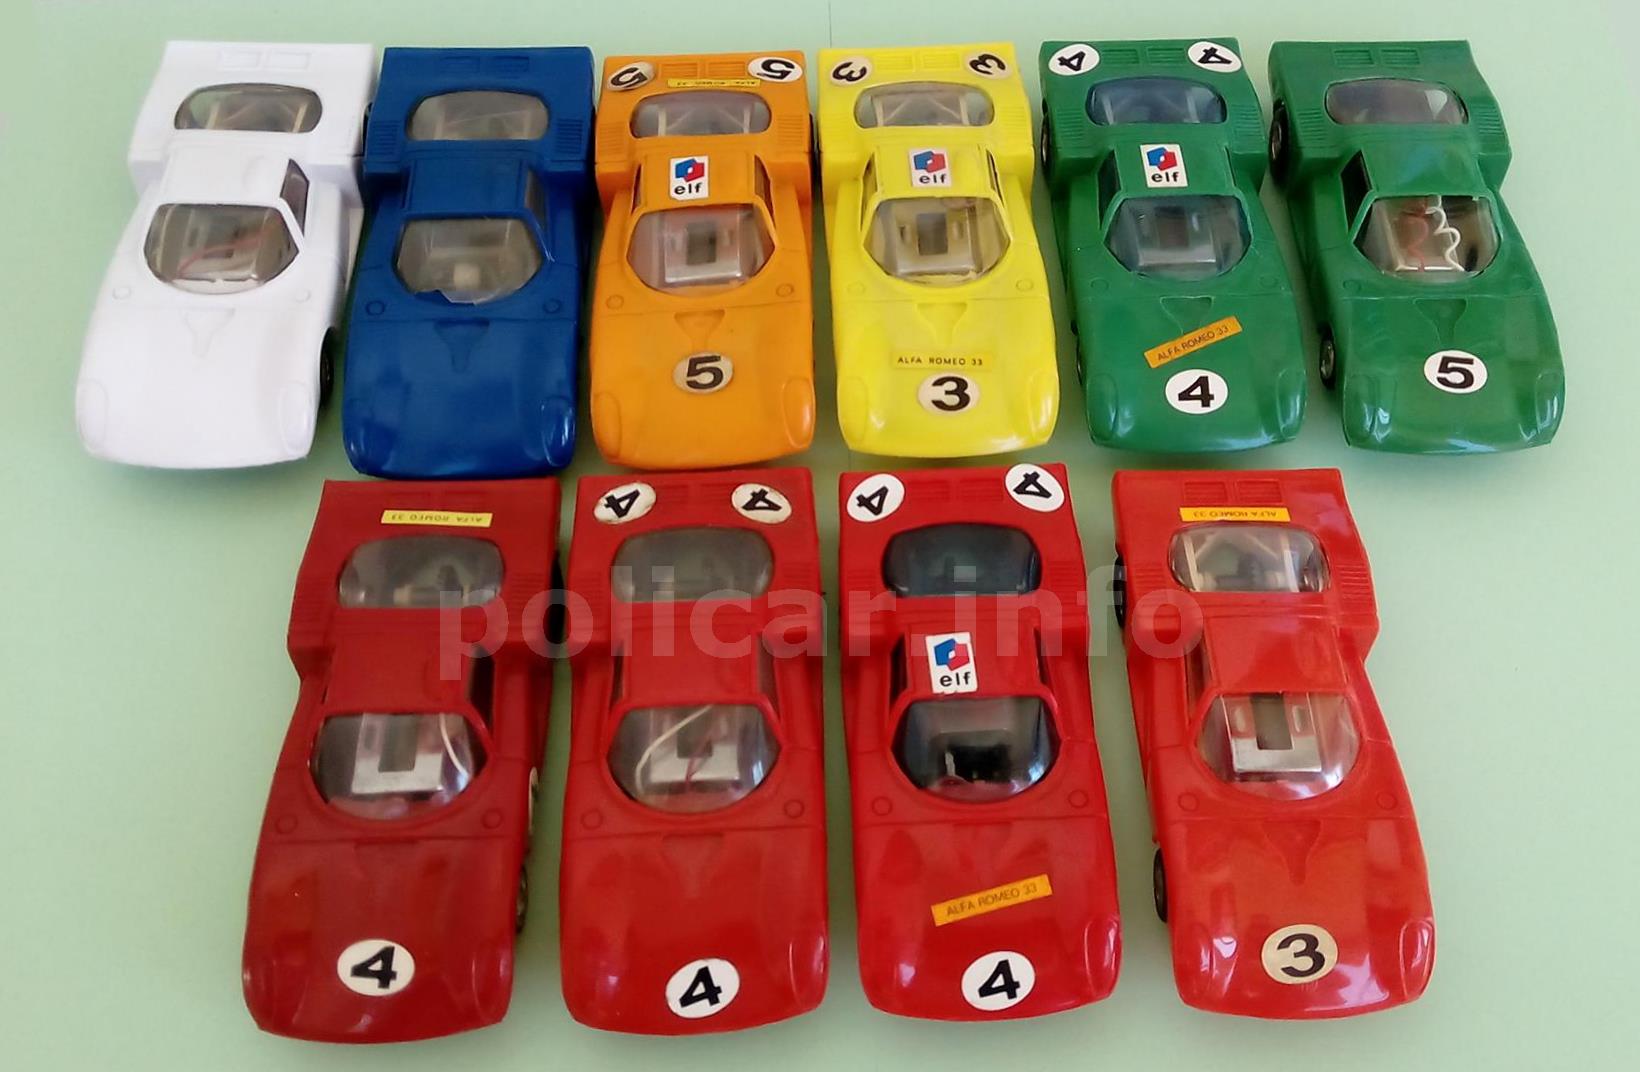 Alfa Romeo 33/2 Daytona in dieci colori diversi.